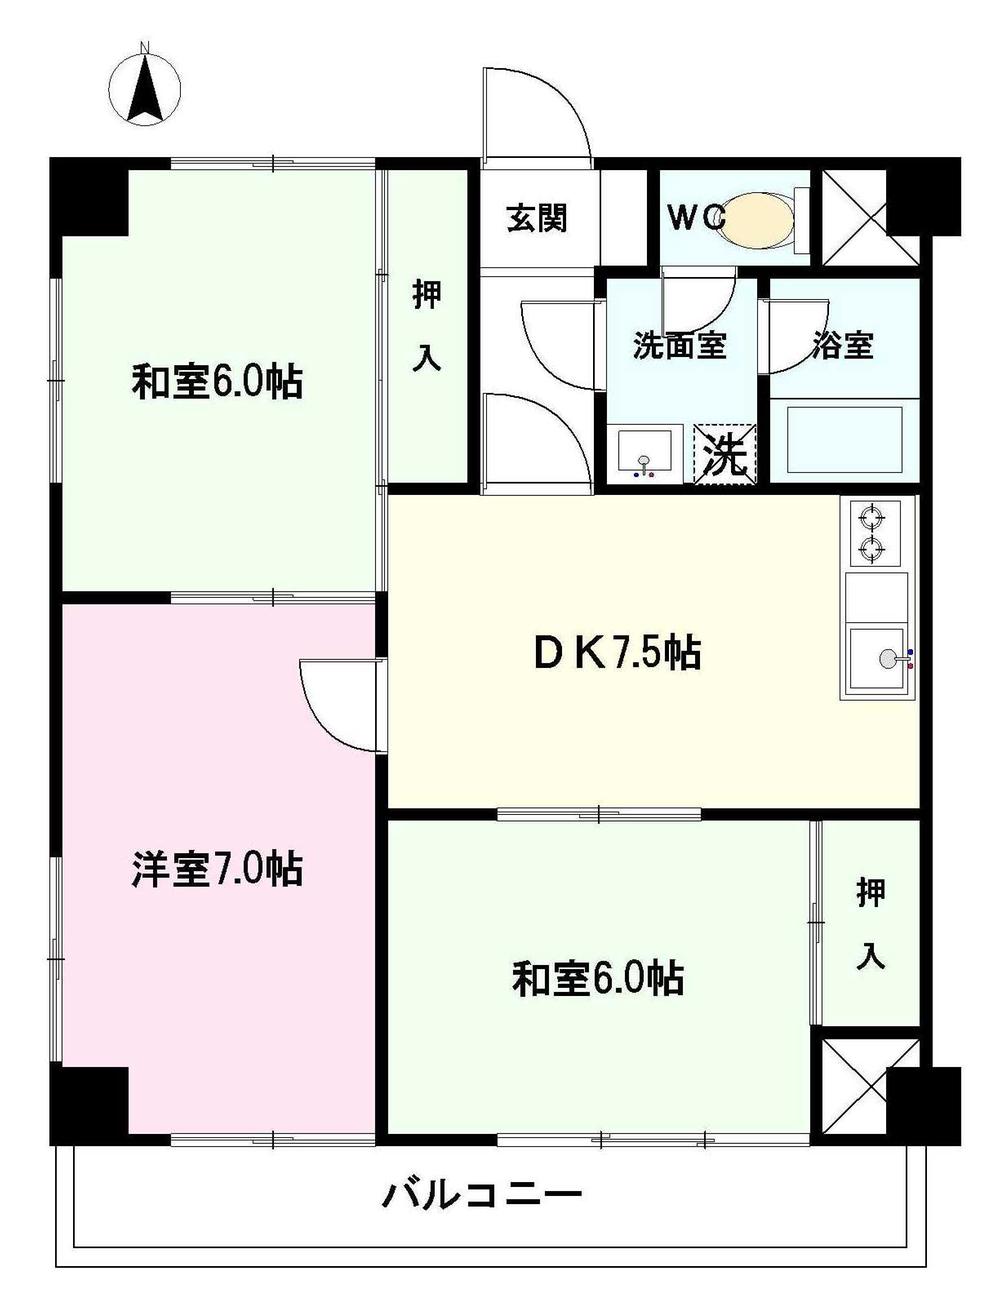 Floor plan. 3DK, Price 9.6 million yen, Occupied area 58.32 sq m , Balcony area 7.2 sq m